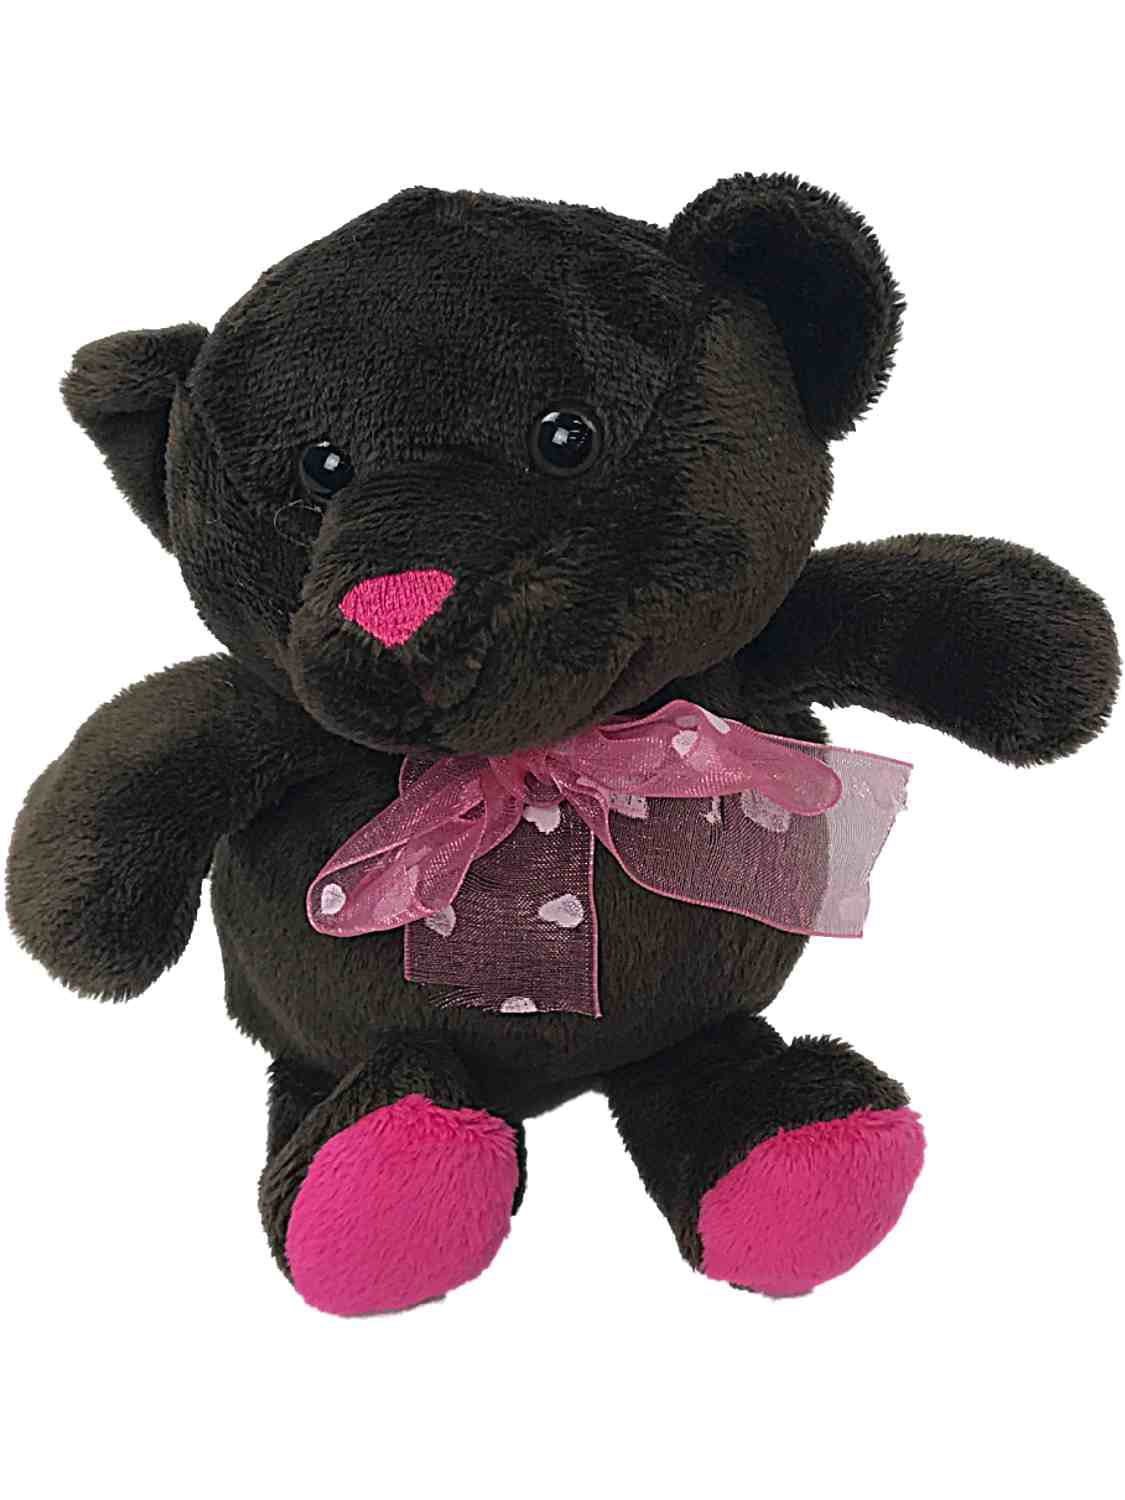 Light Brown Teddy Bear Plush Stuffed Animal Soft Fuzzy 11 Sitting Dan Dee Swirl for sale online 